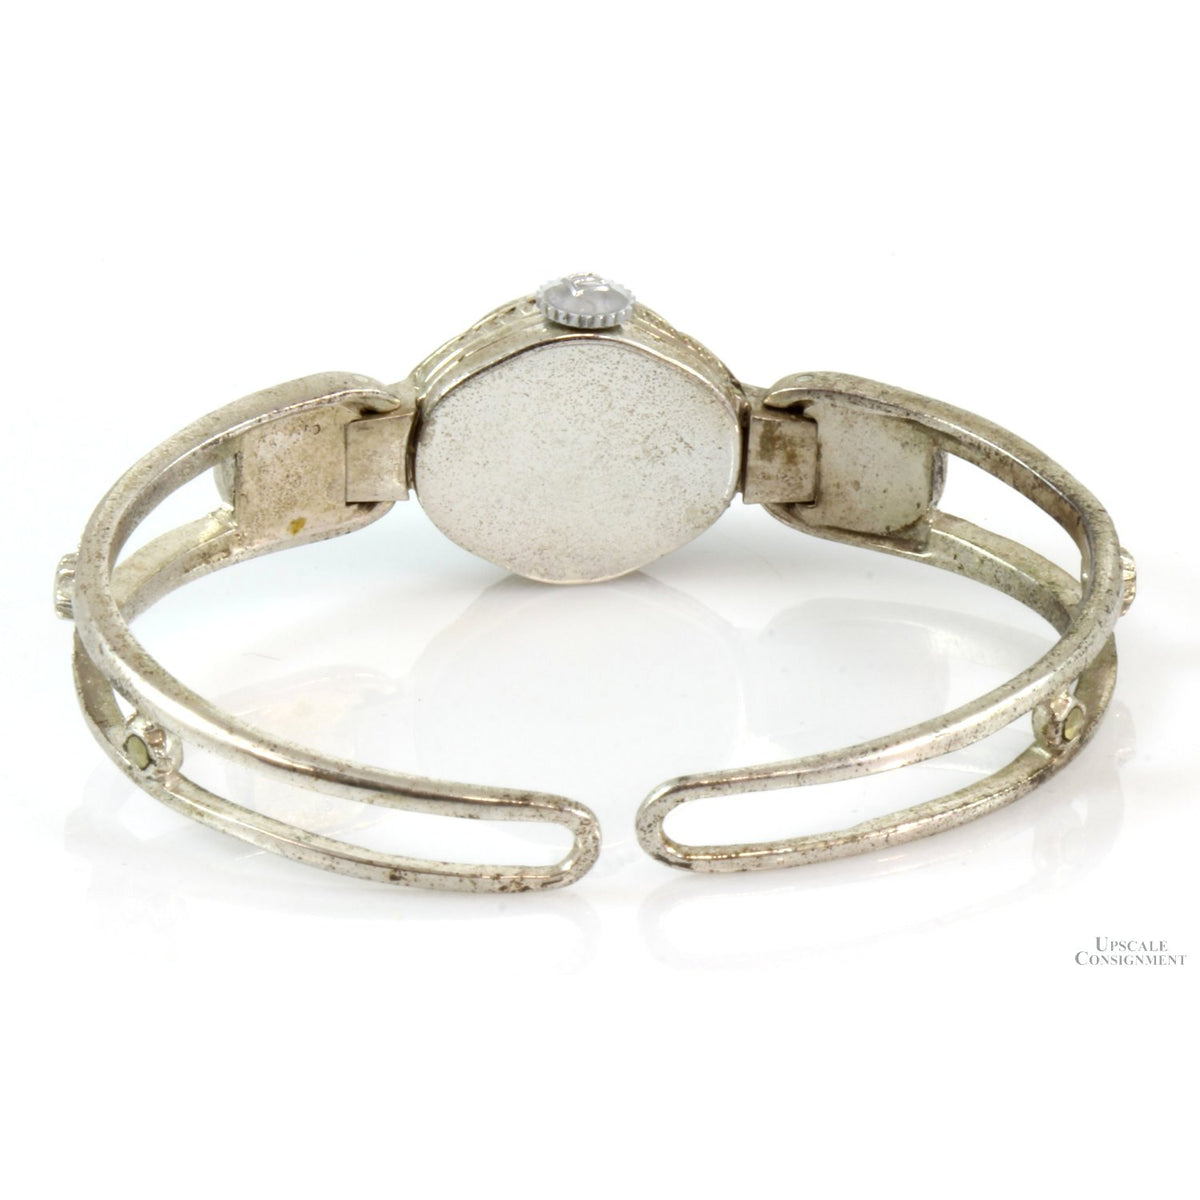 Swiss Peak-A-Boo 17 Jewel 1950s Marcasite Cuff Wristwatch